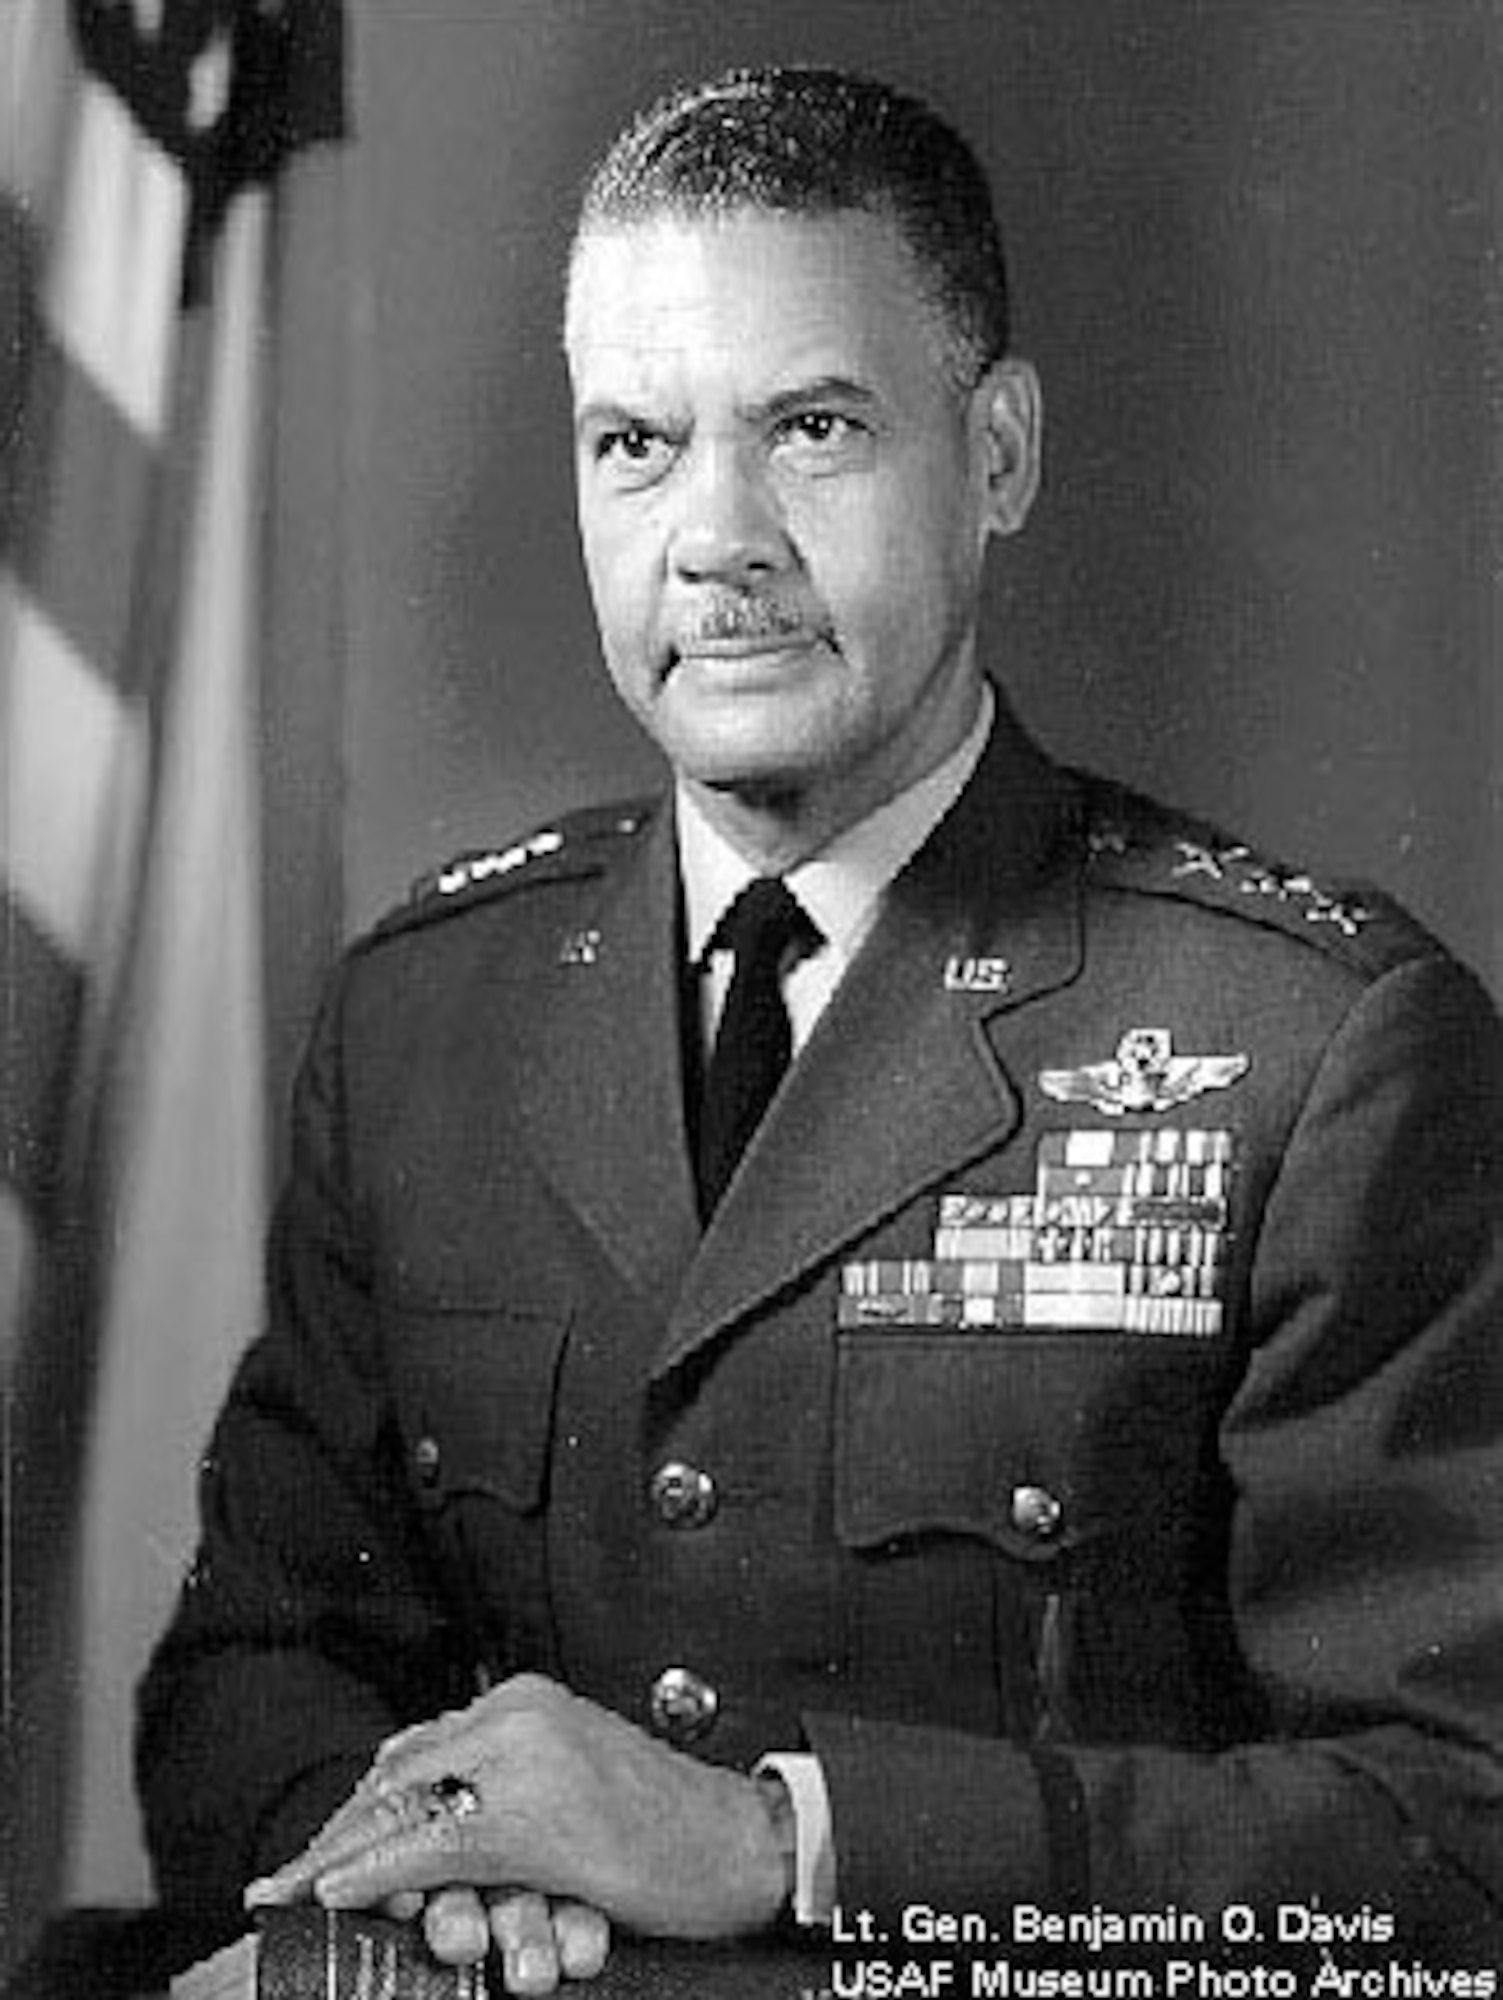 Lt. Gen. Benjamin O. Davis Jr. (U.S. Air Force photo)